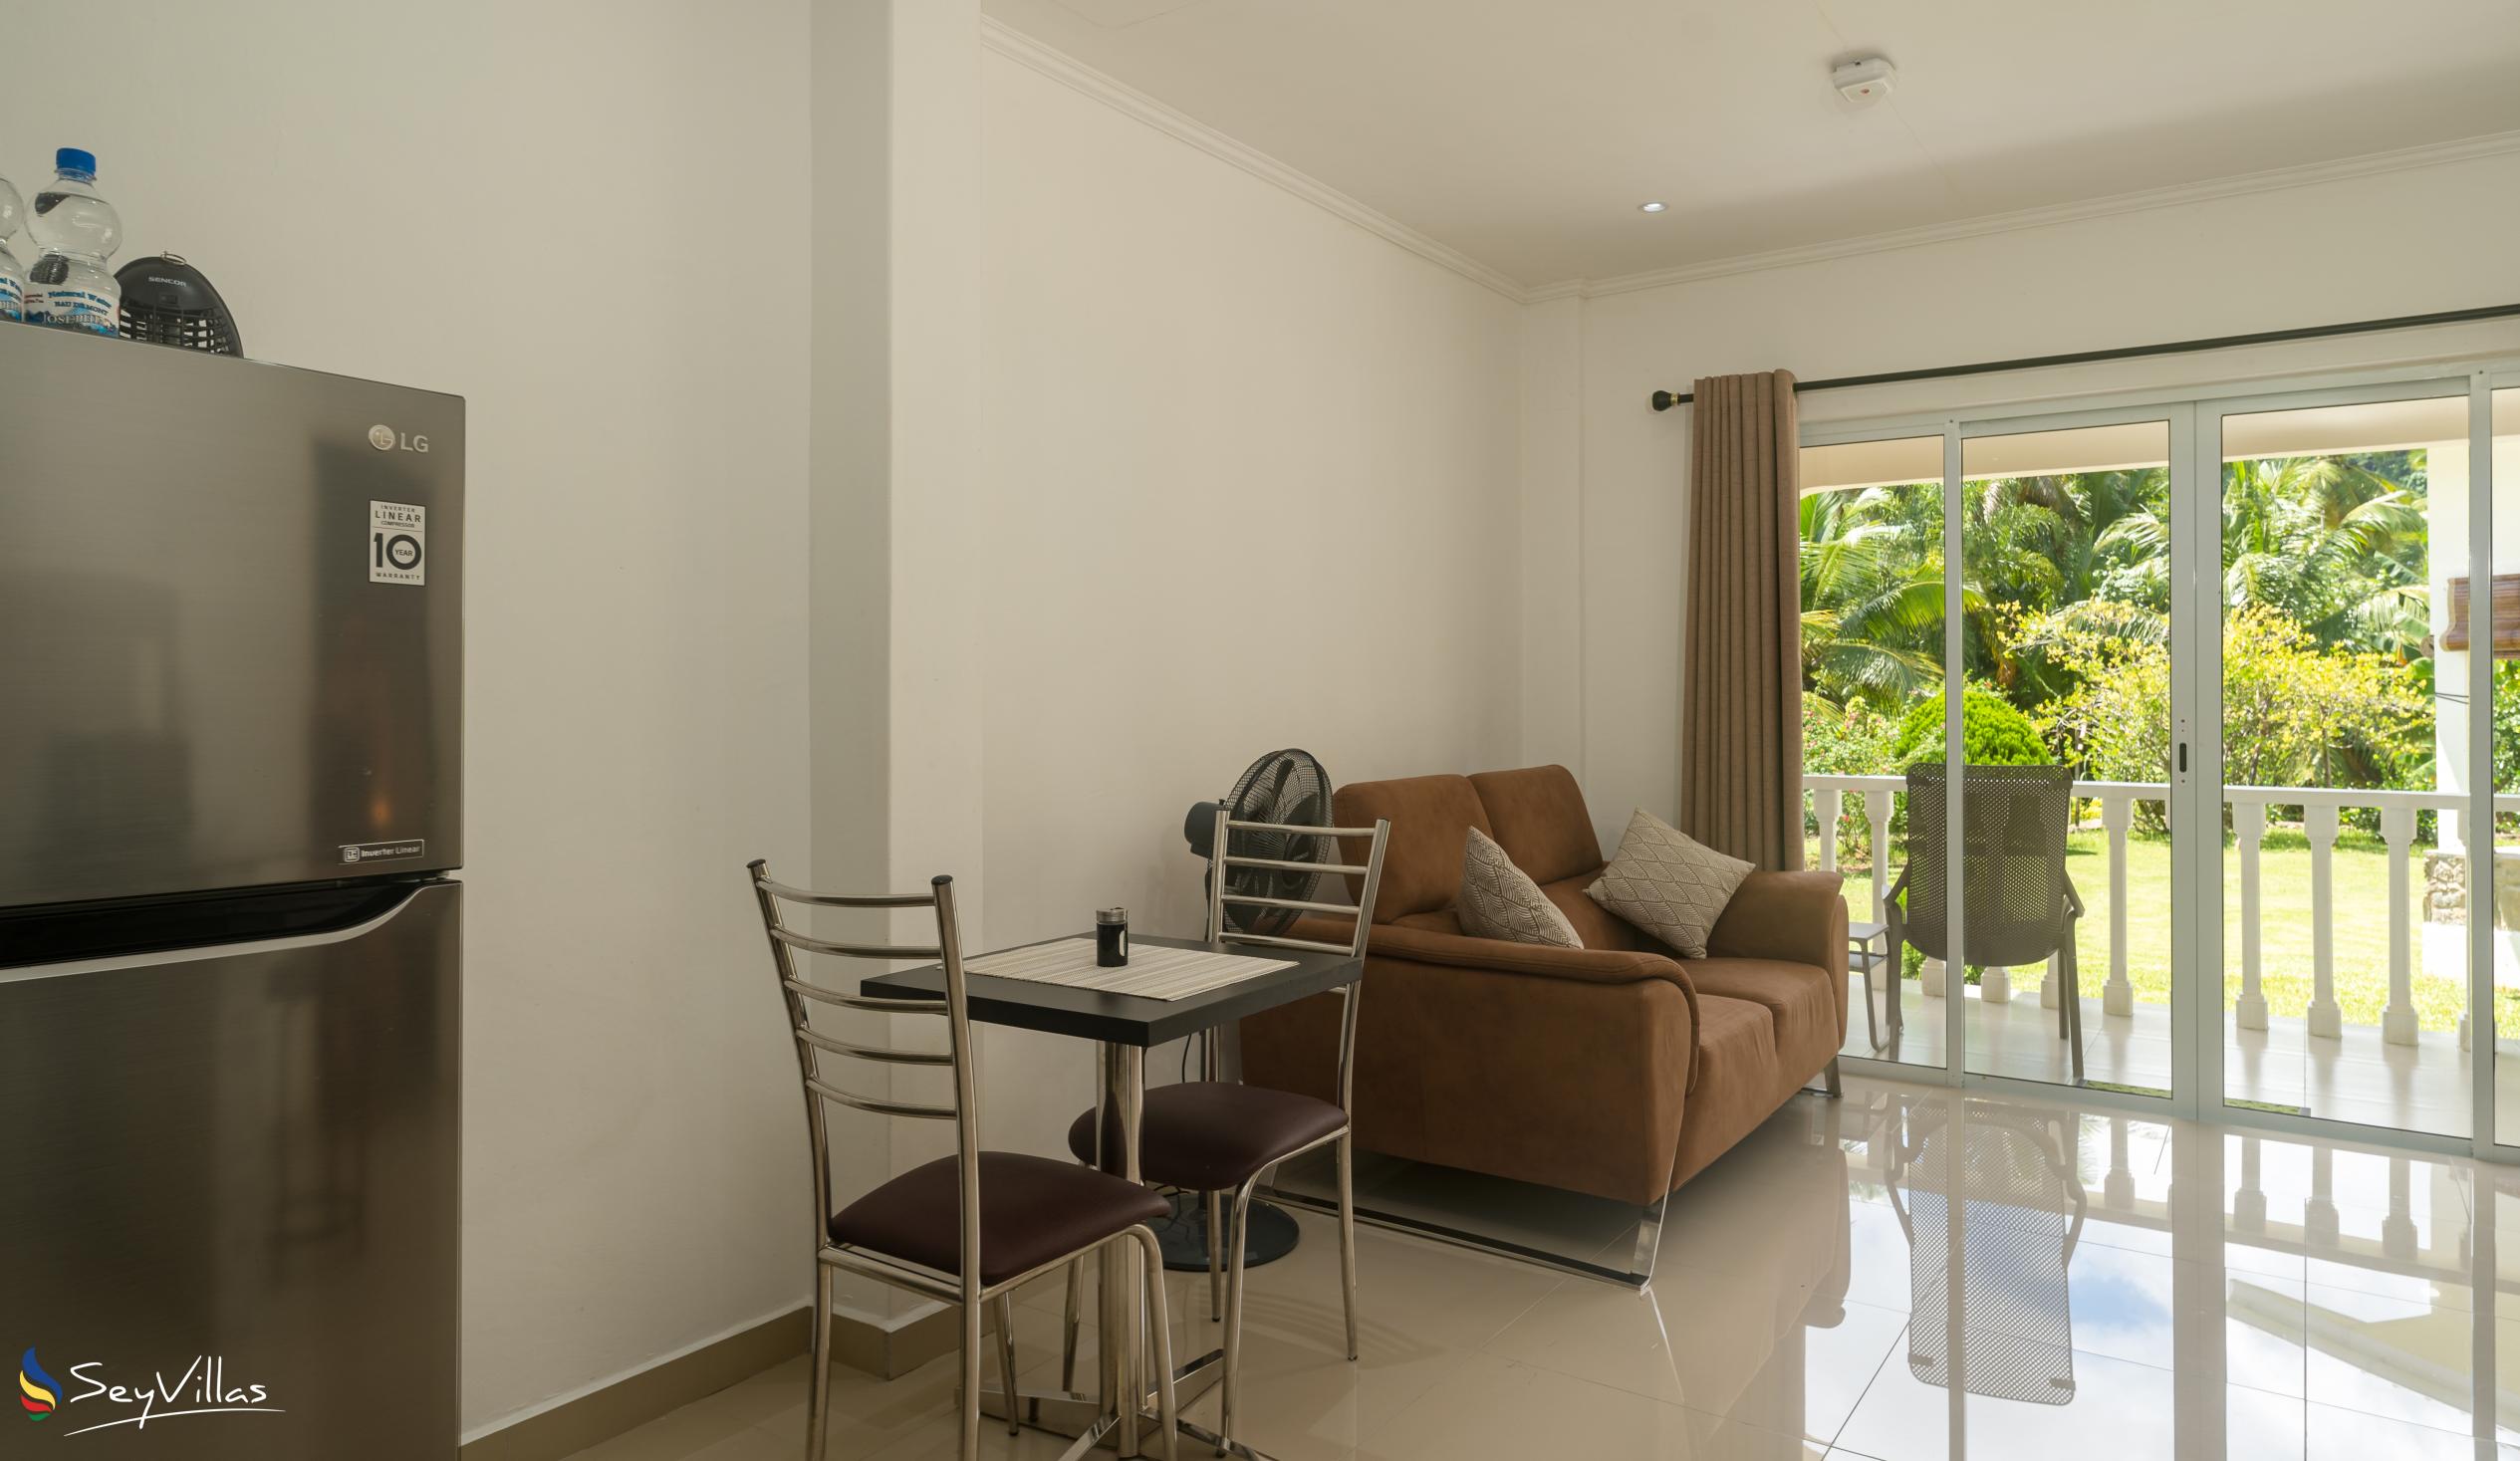 Foto 27: Paul's Residence - Appartamento con 1 camera - Mahé (Seychelles)